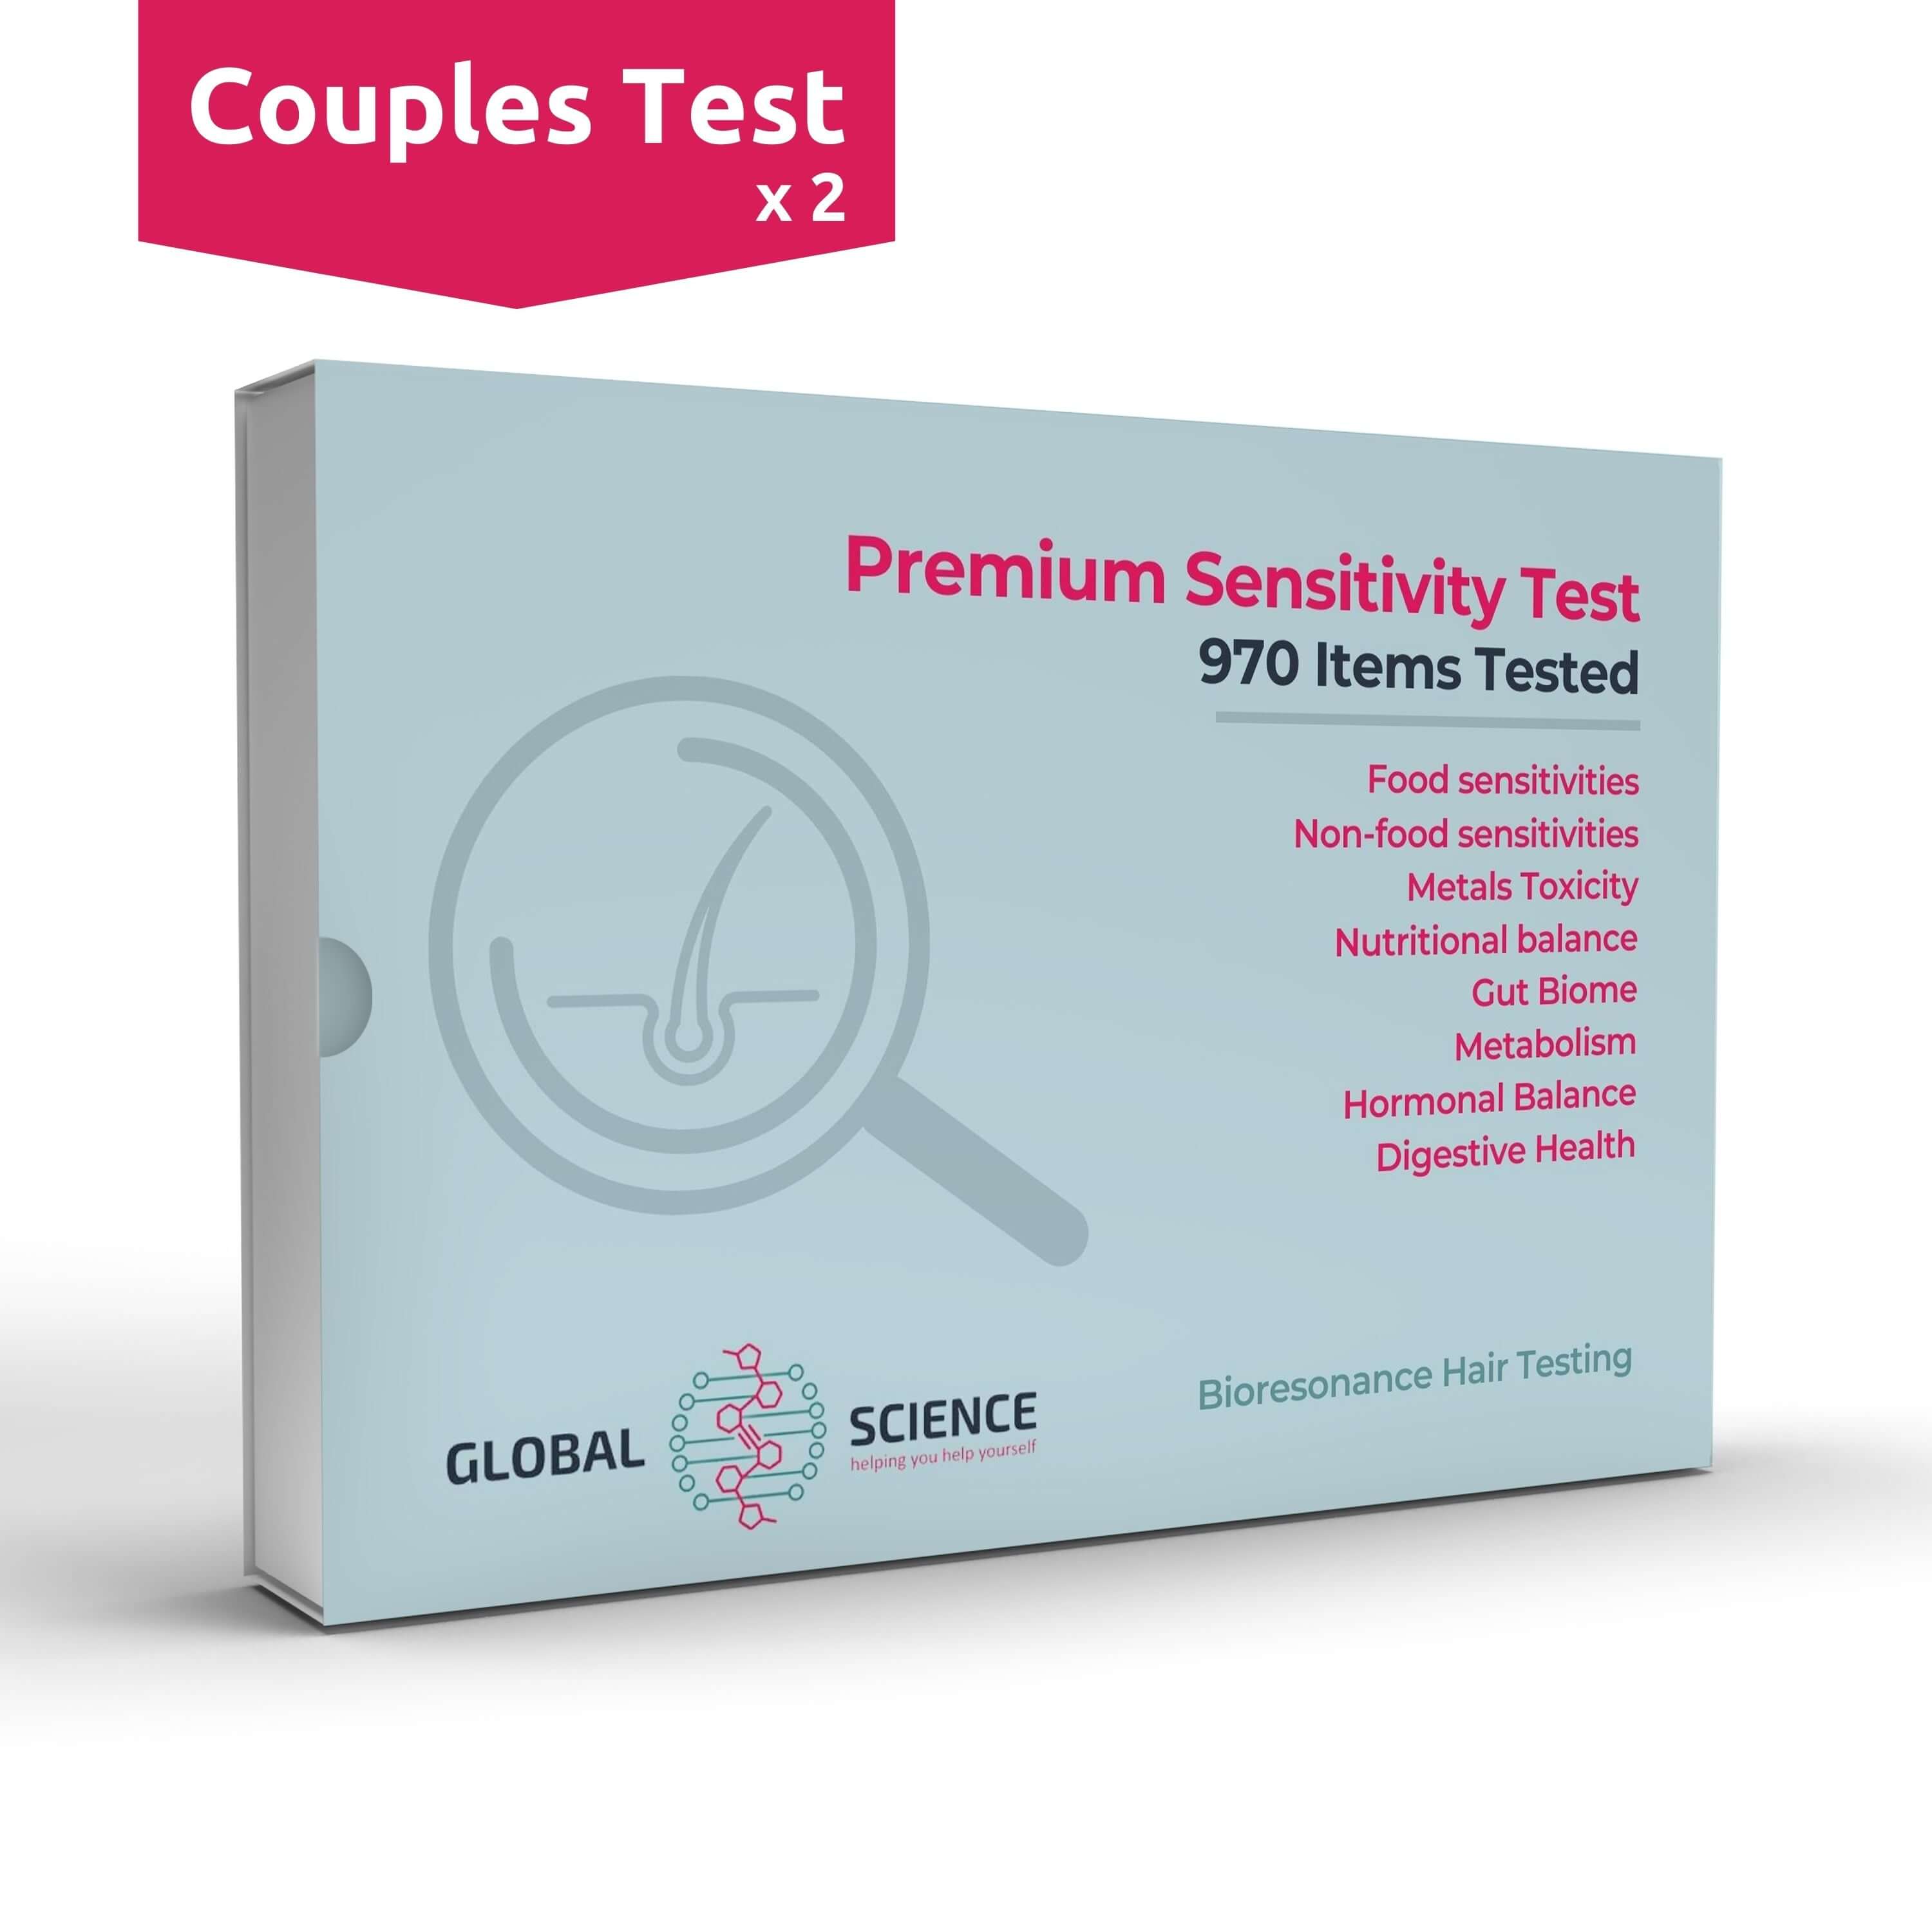 Premium Sensitivity 970 Mock Up Kit Couples - Soy Allergy